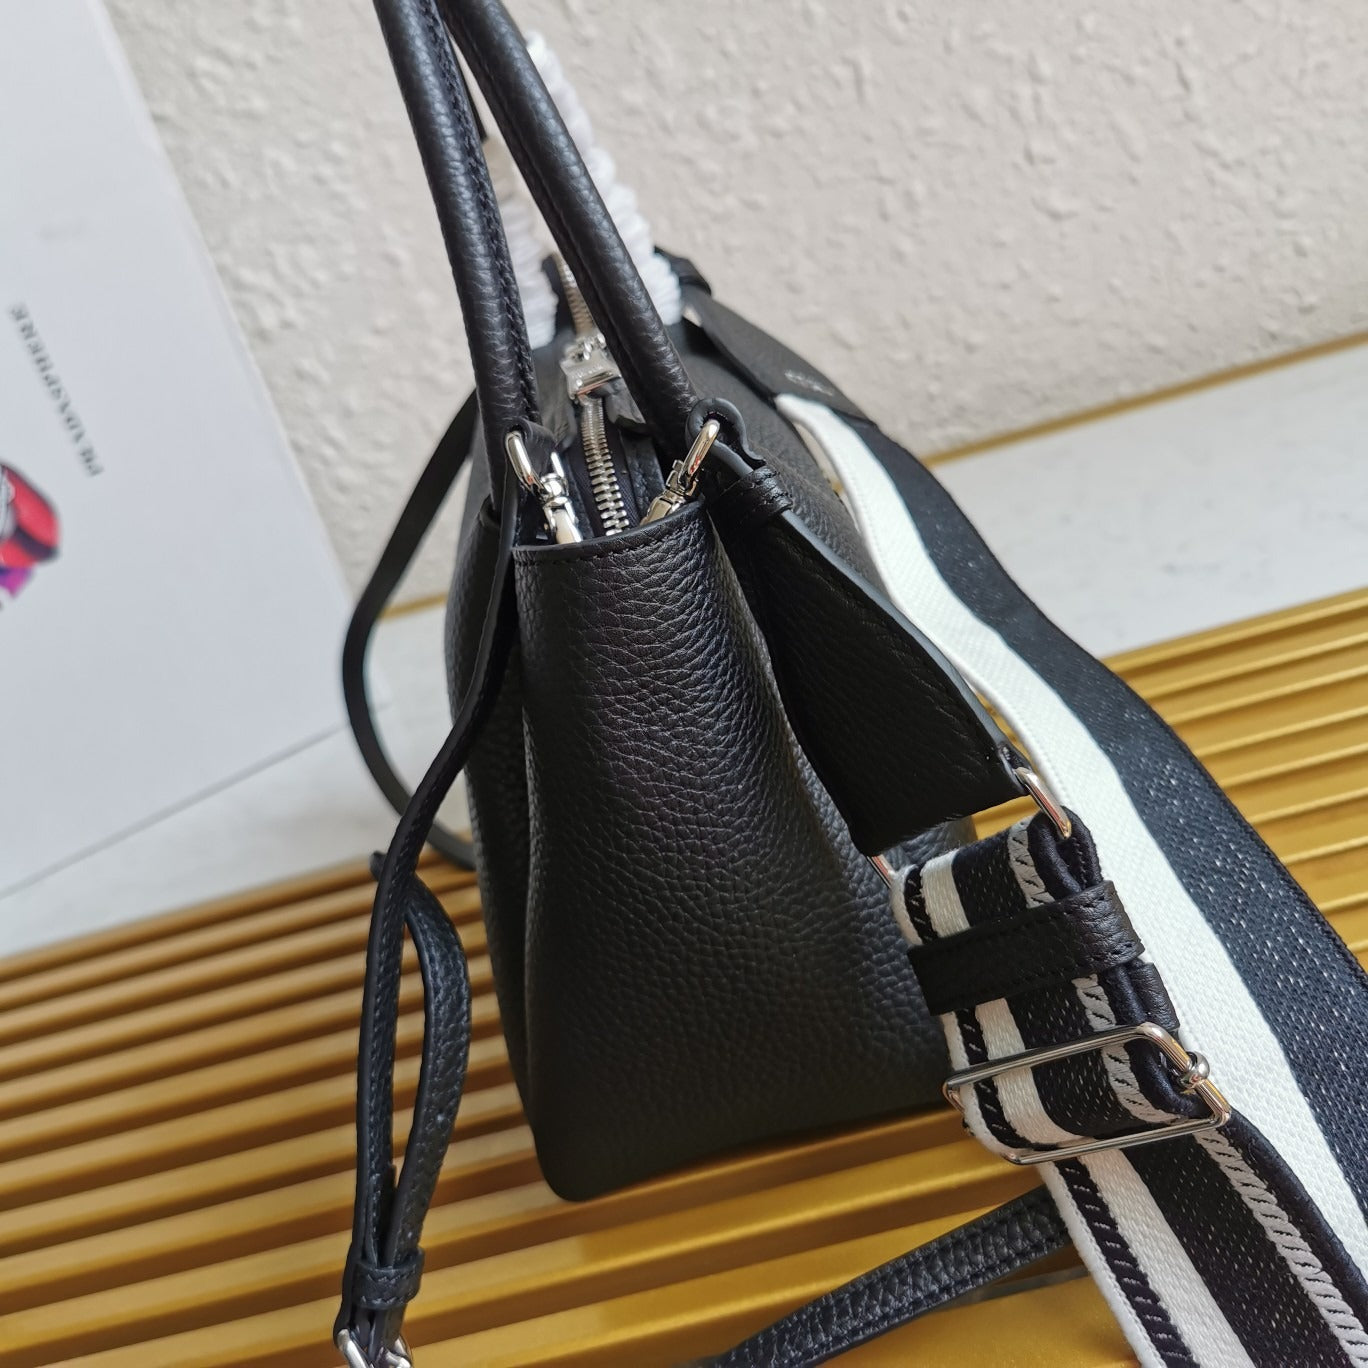 Small Leather Handbag Black